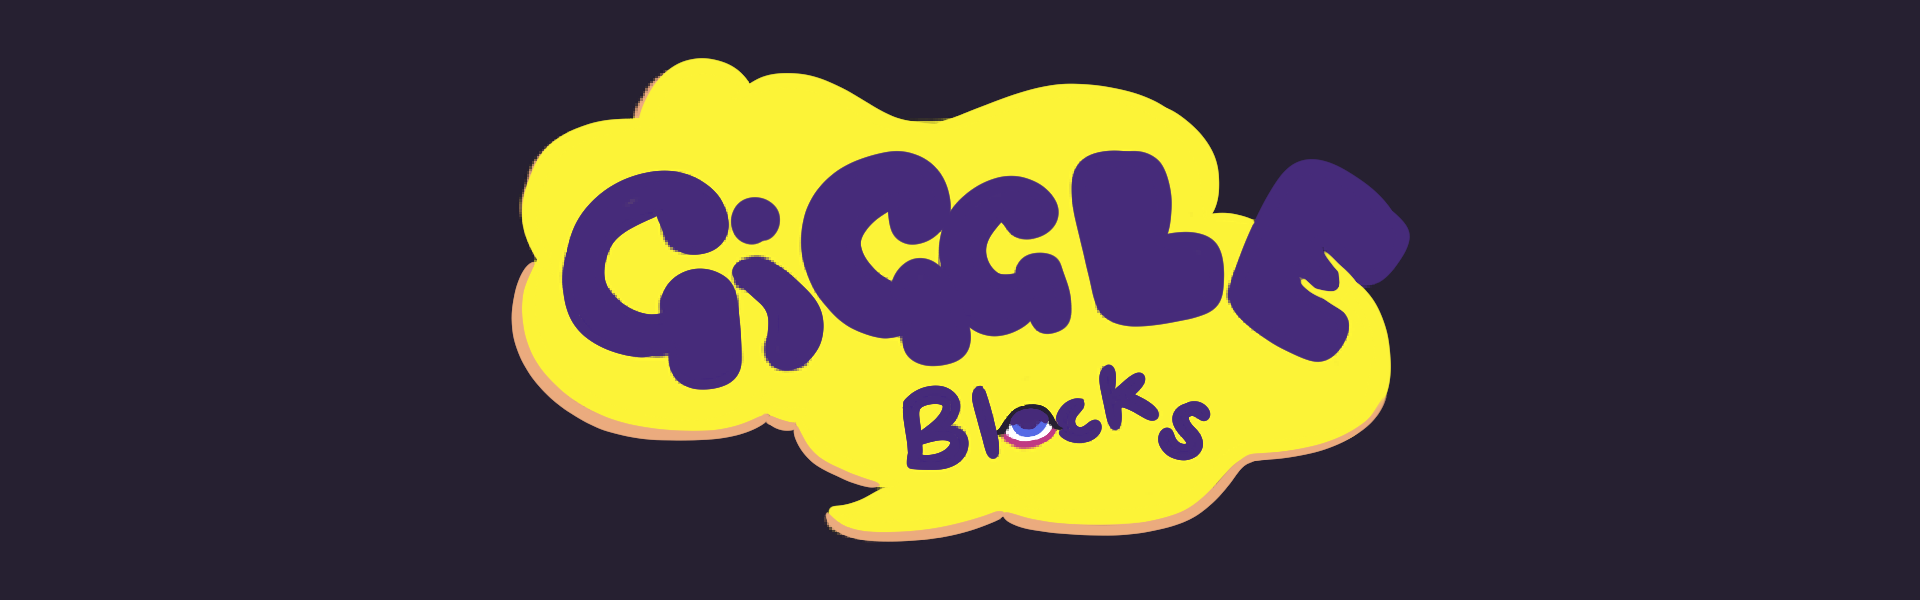 Giggle Blocks